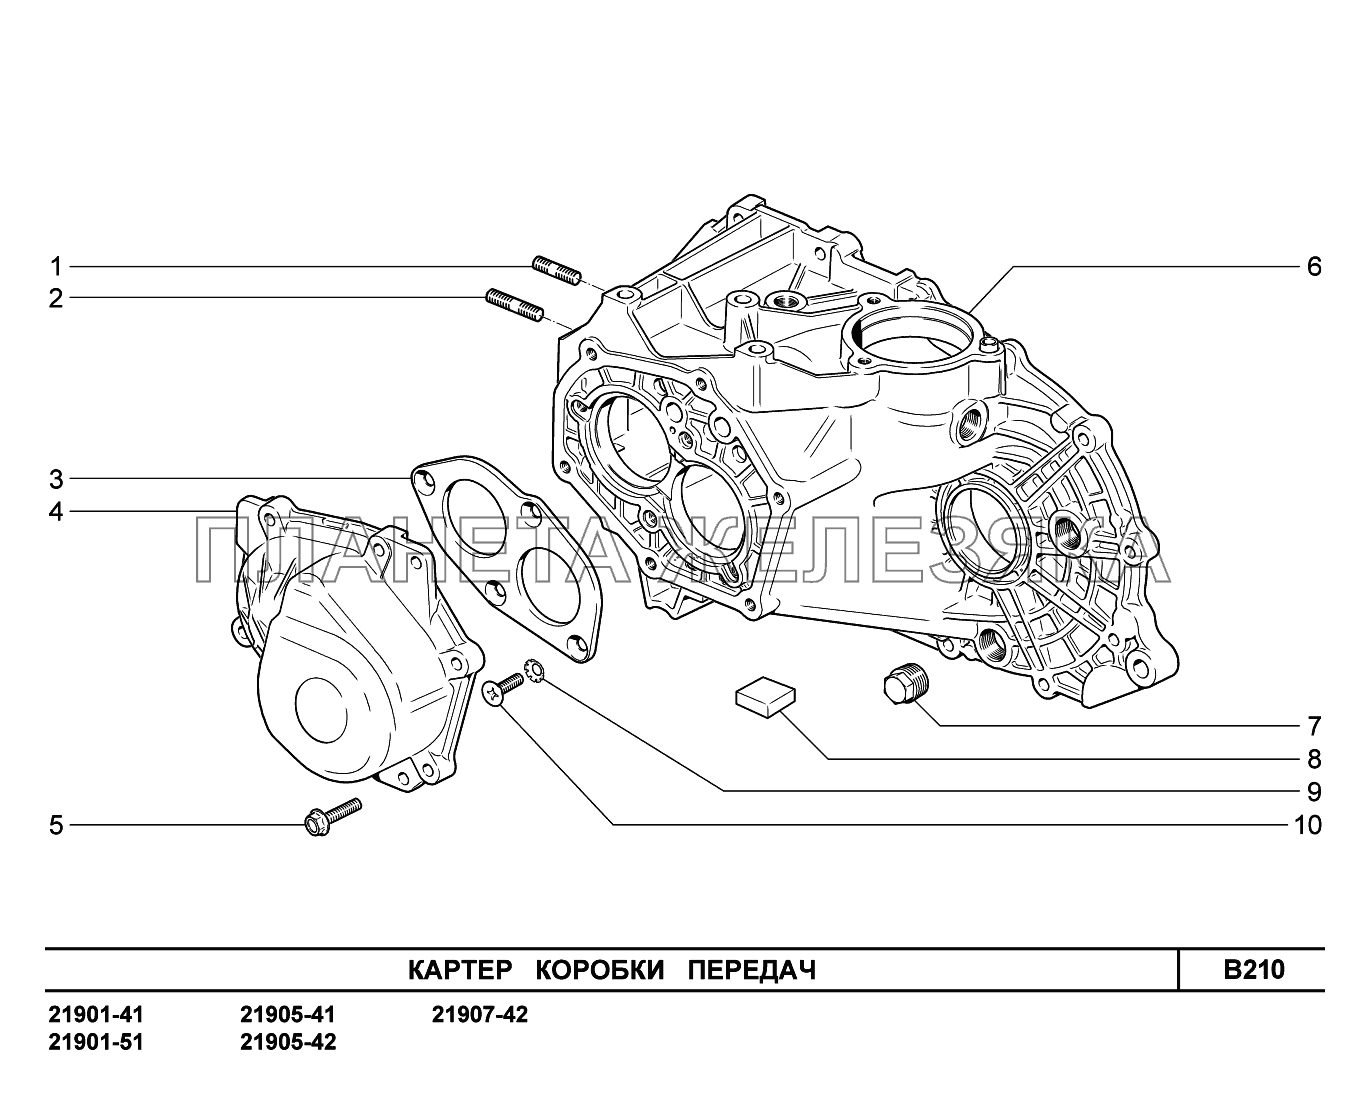 B210. Картер коробки передач Lada Granta-2190